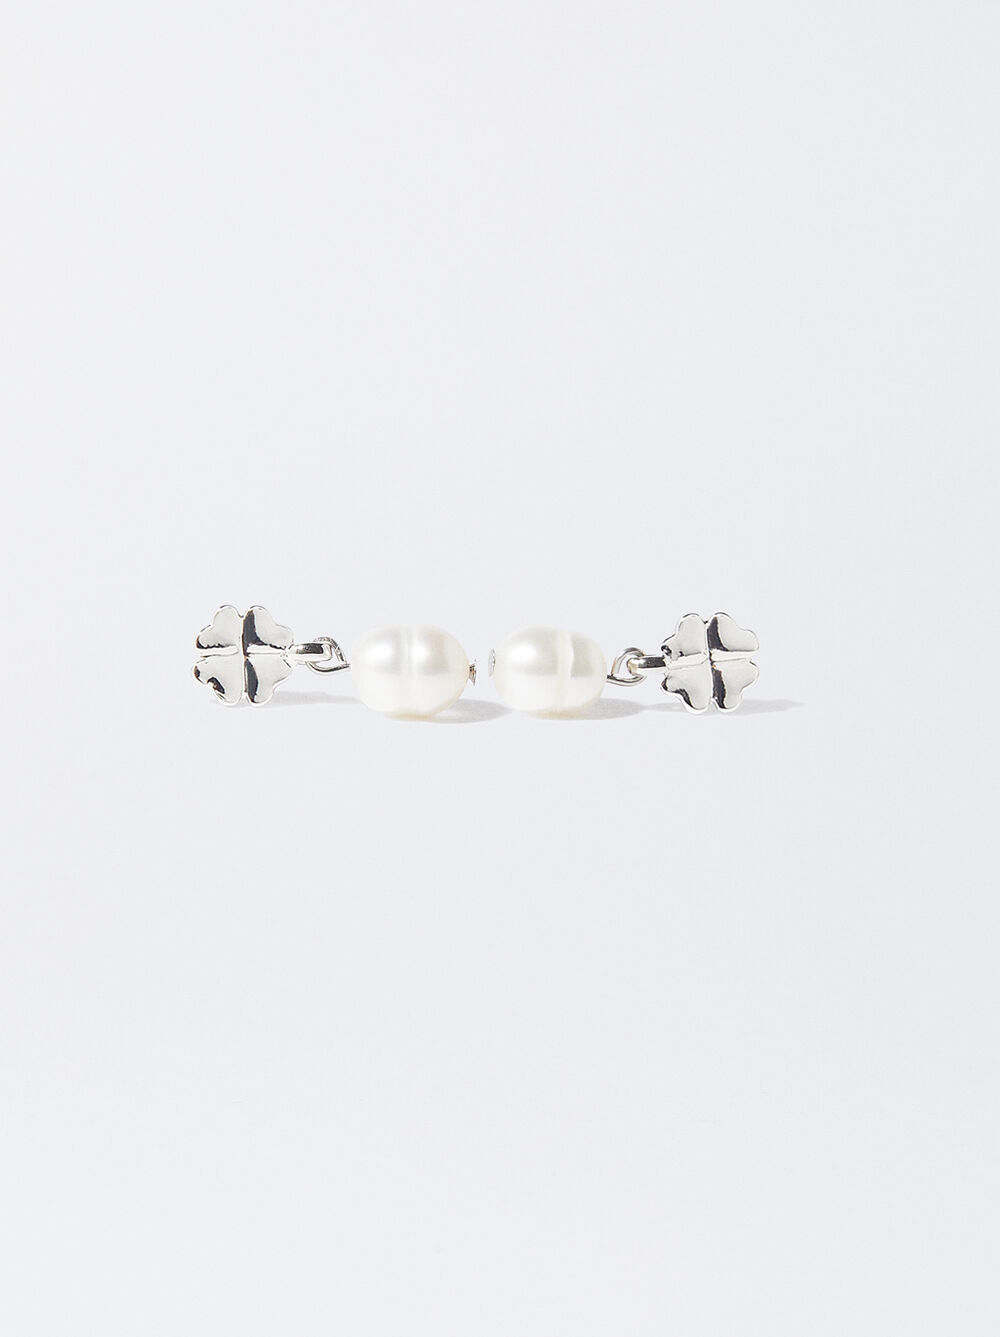 Earrings  With Freshwater Pearl